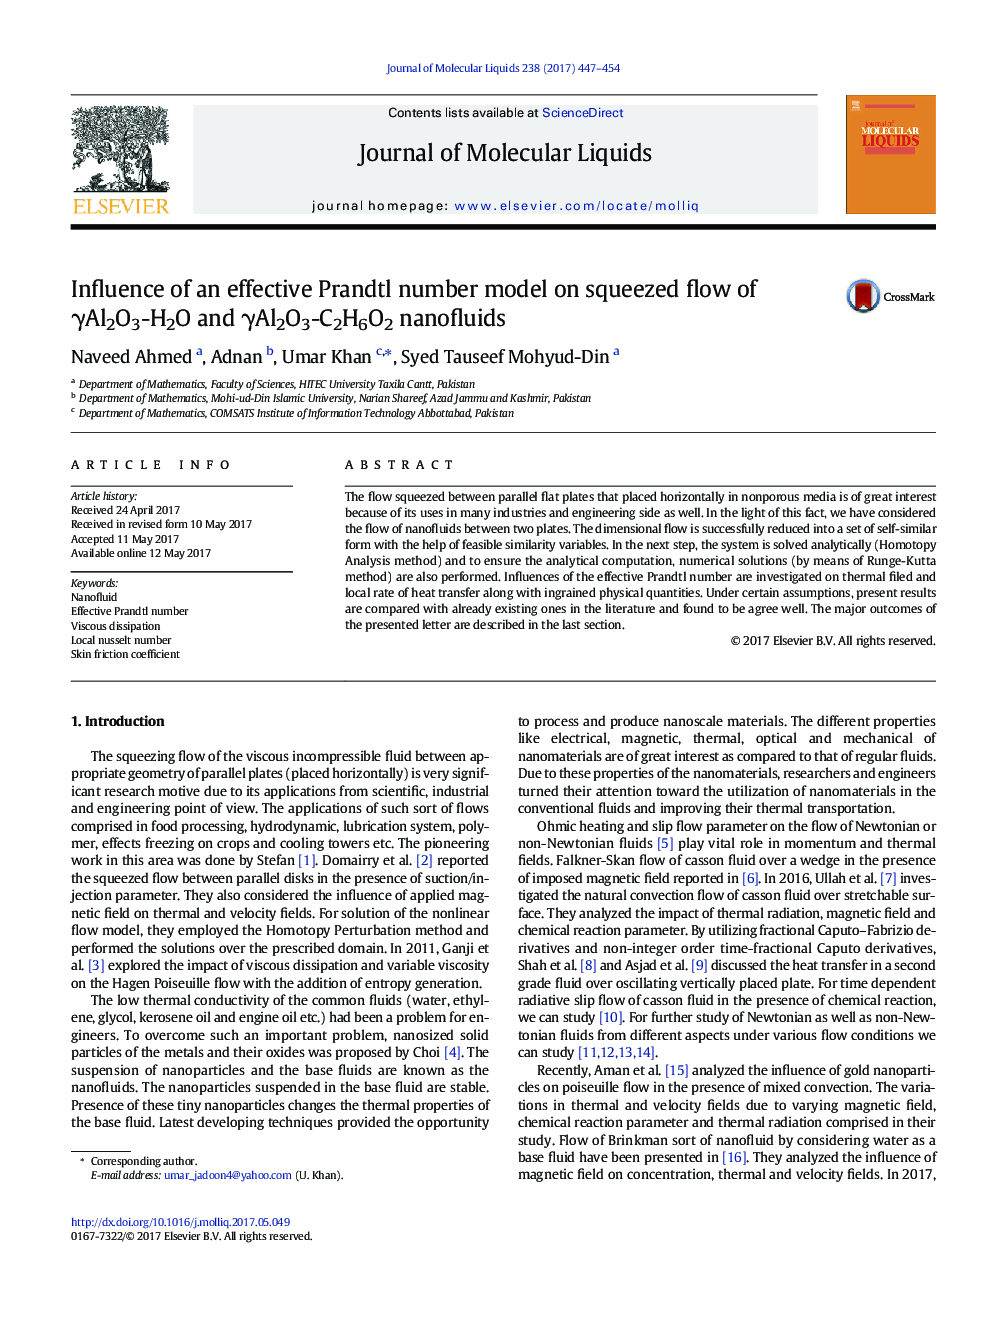 Influence of an effective Prandtl number model on squeezed flow of Î³Al2O3-H2O and Î³Al2O3-C2H6O2 nanofluids